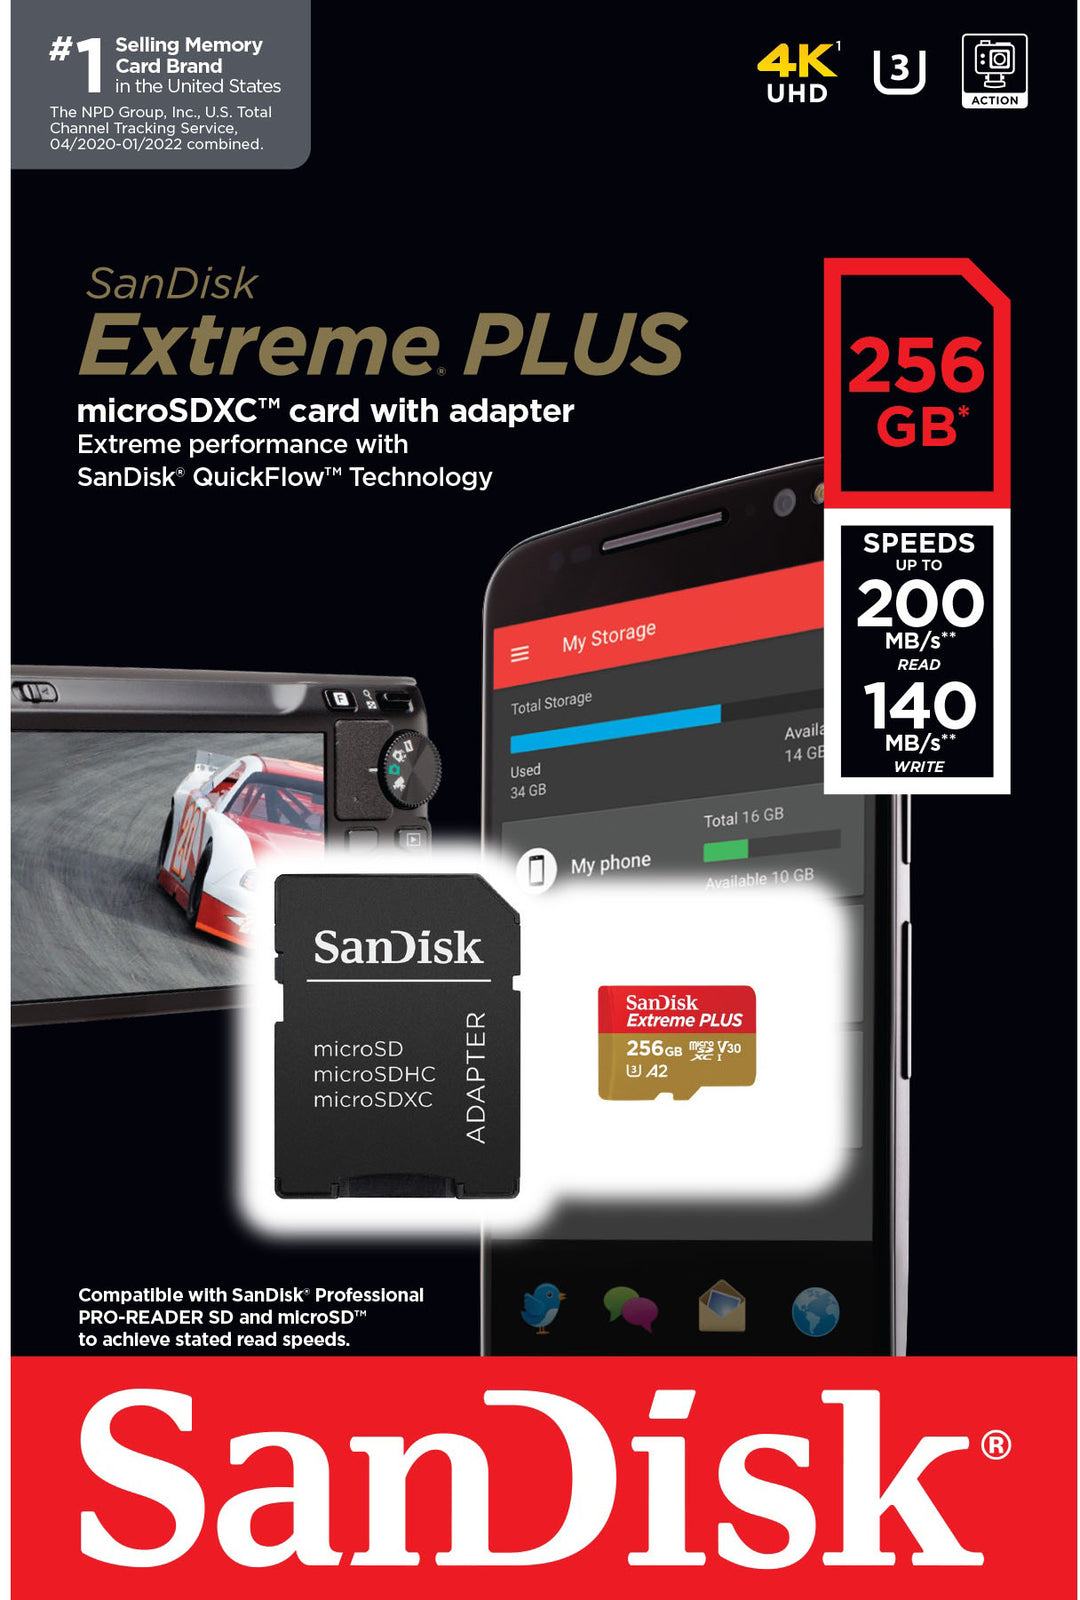 SanDisk - Extreme PLUS 256GB microSDXC UHS-I Memory Card_2